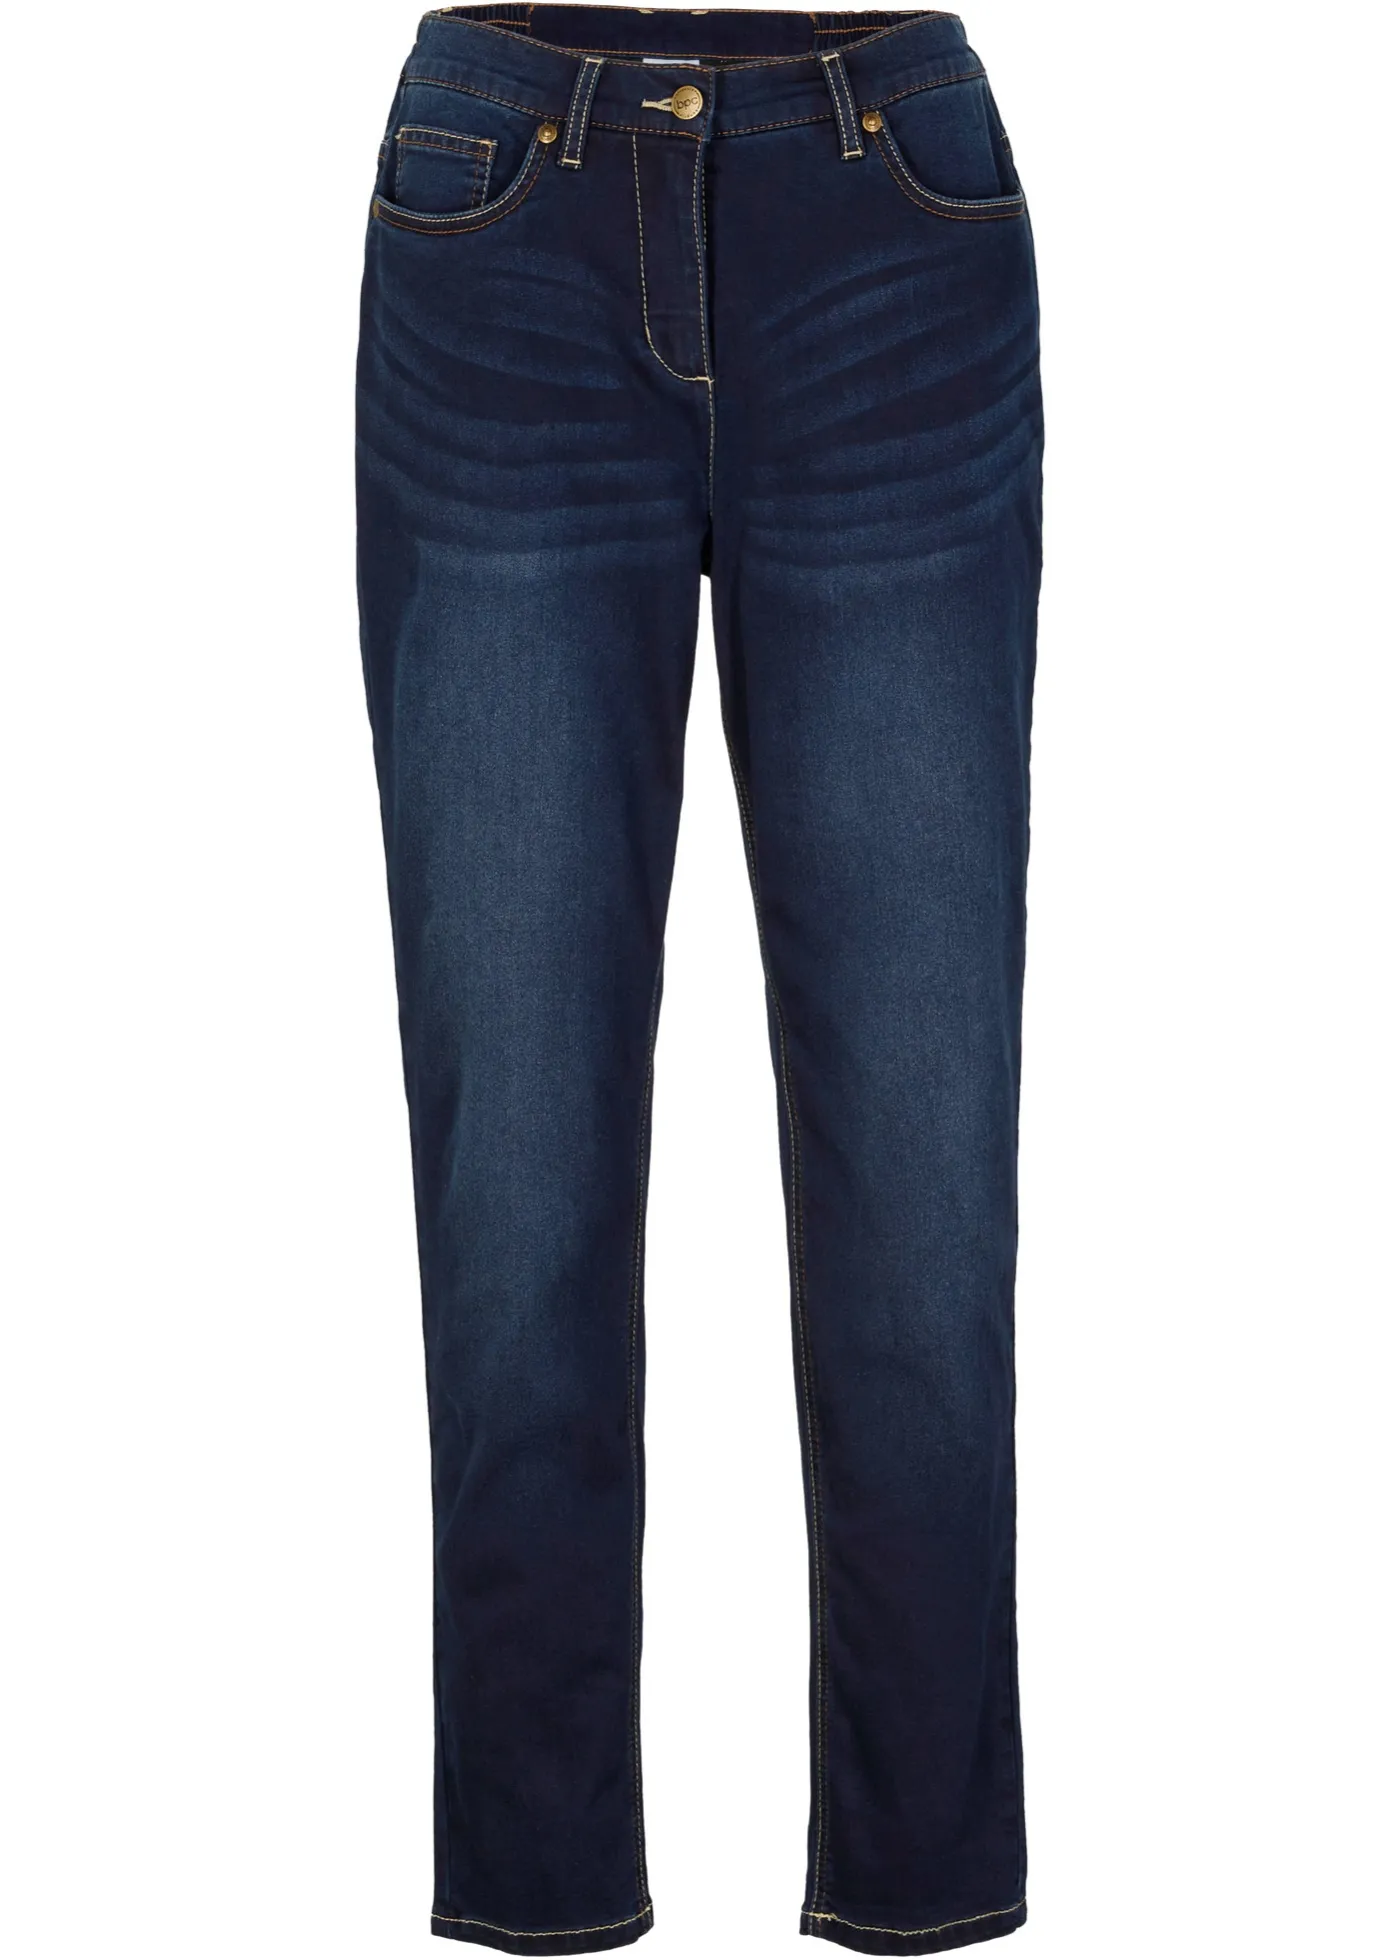 Jeans termici con cinta comoda, stile boyfriend (Blu) - bpc bonprix collection